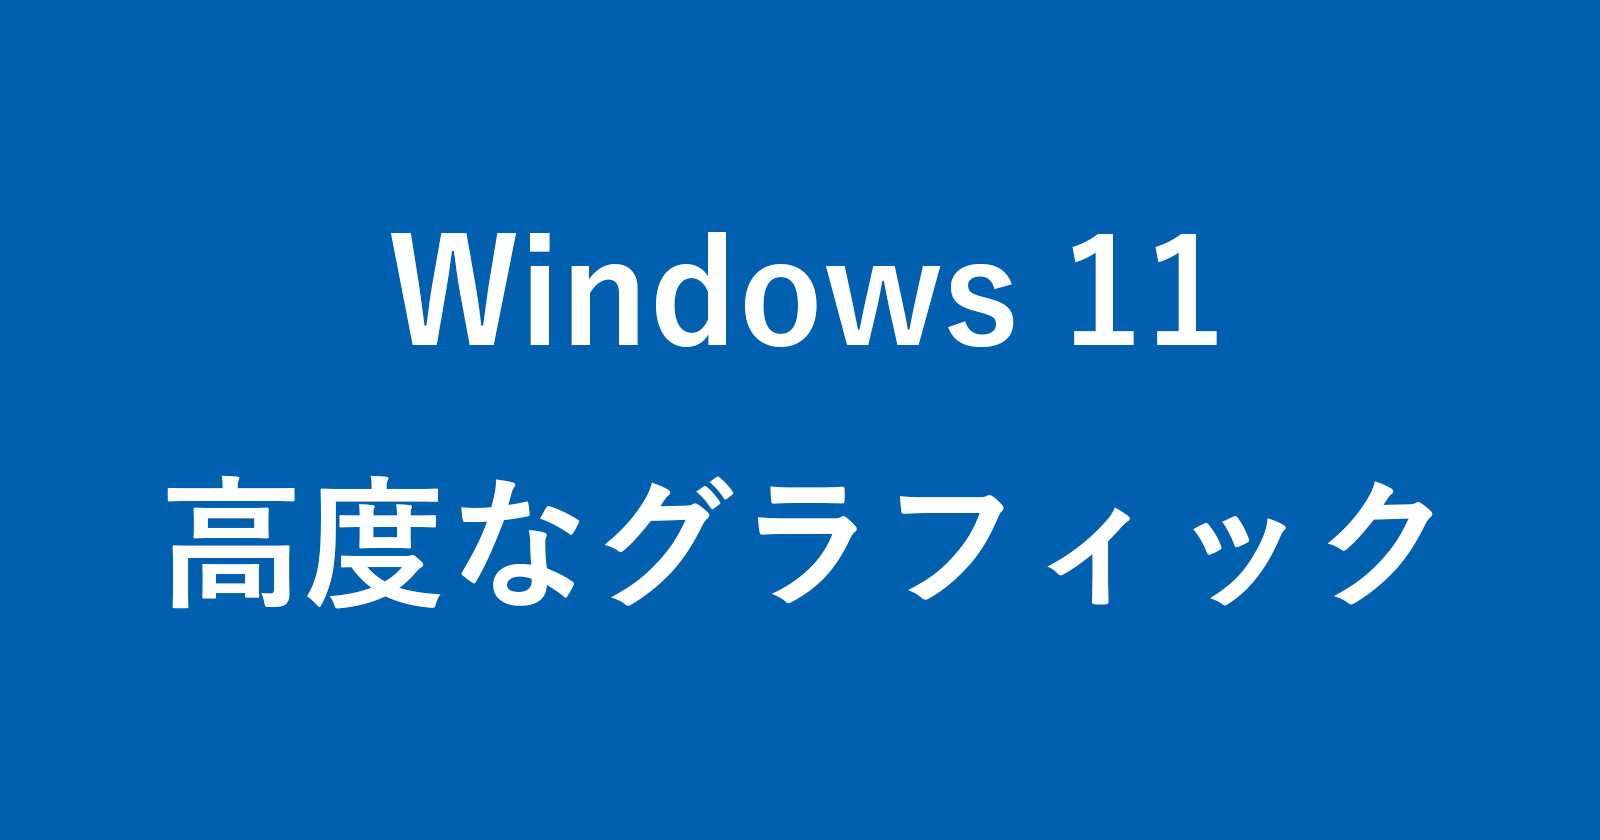 windows 11 high graphics